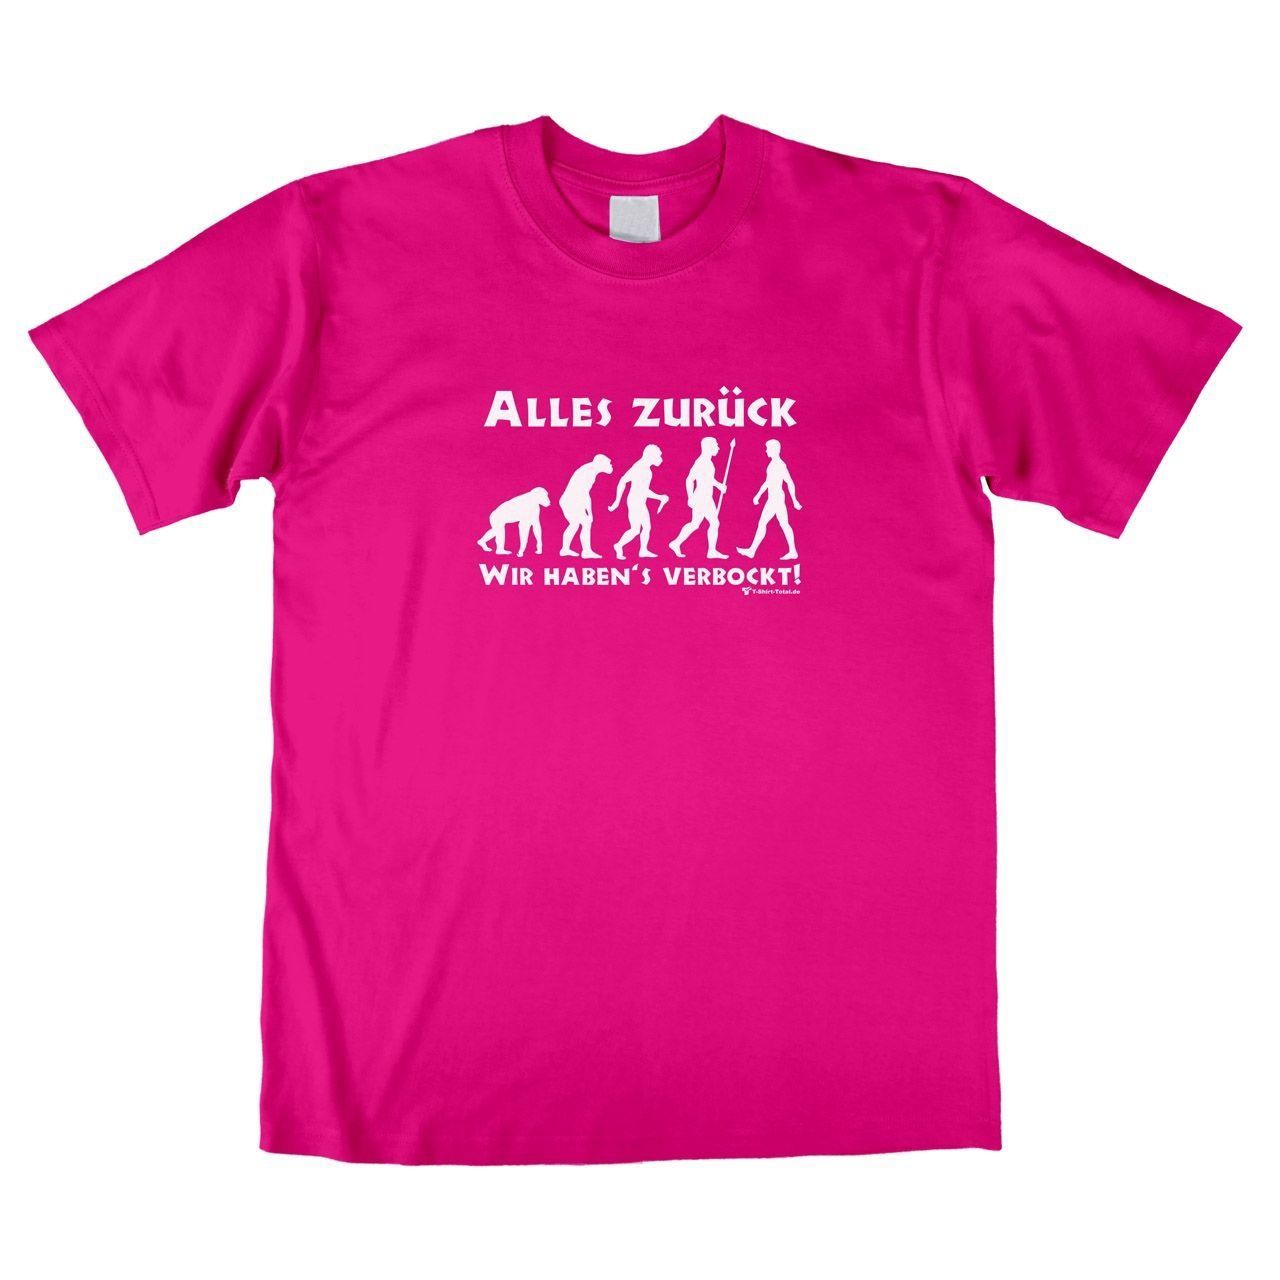 Alles zurück Unisex T-Shirt pink Extra Large